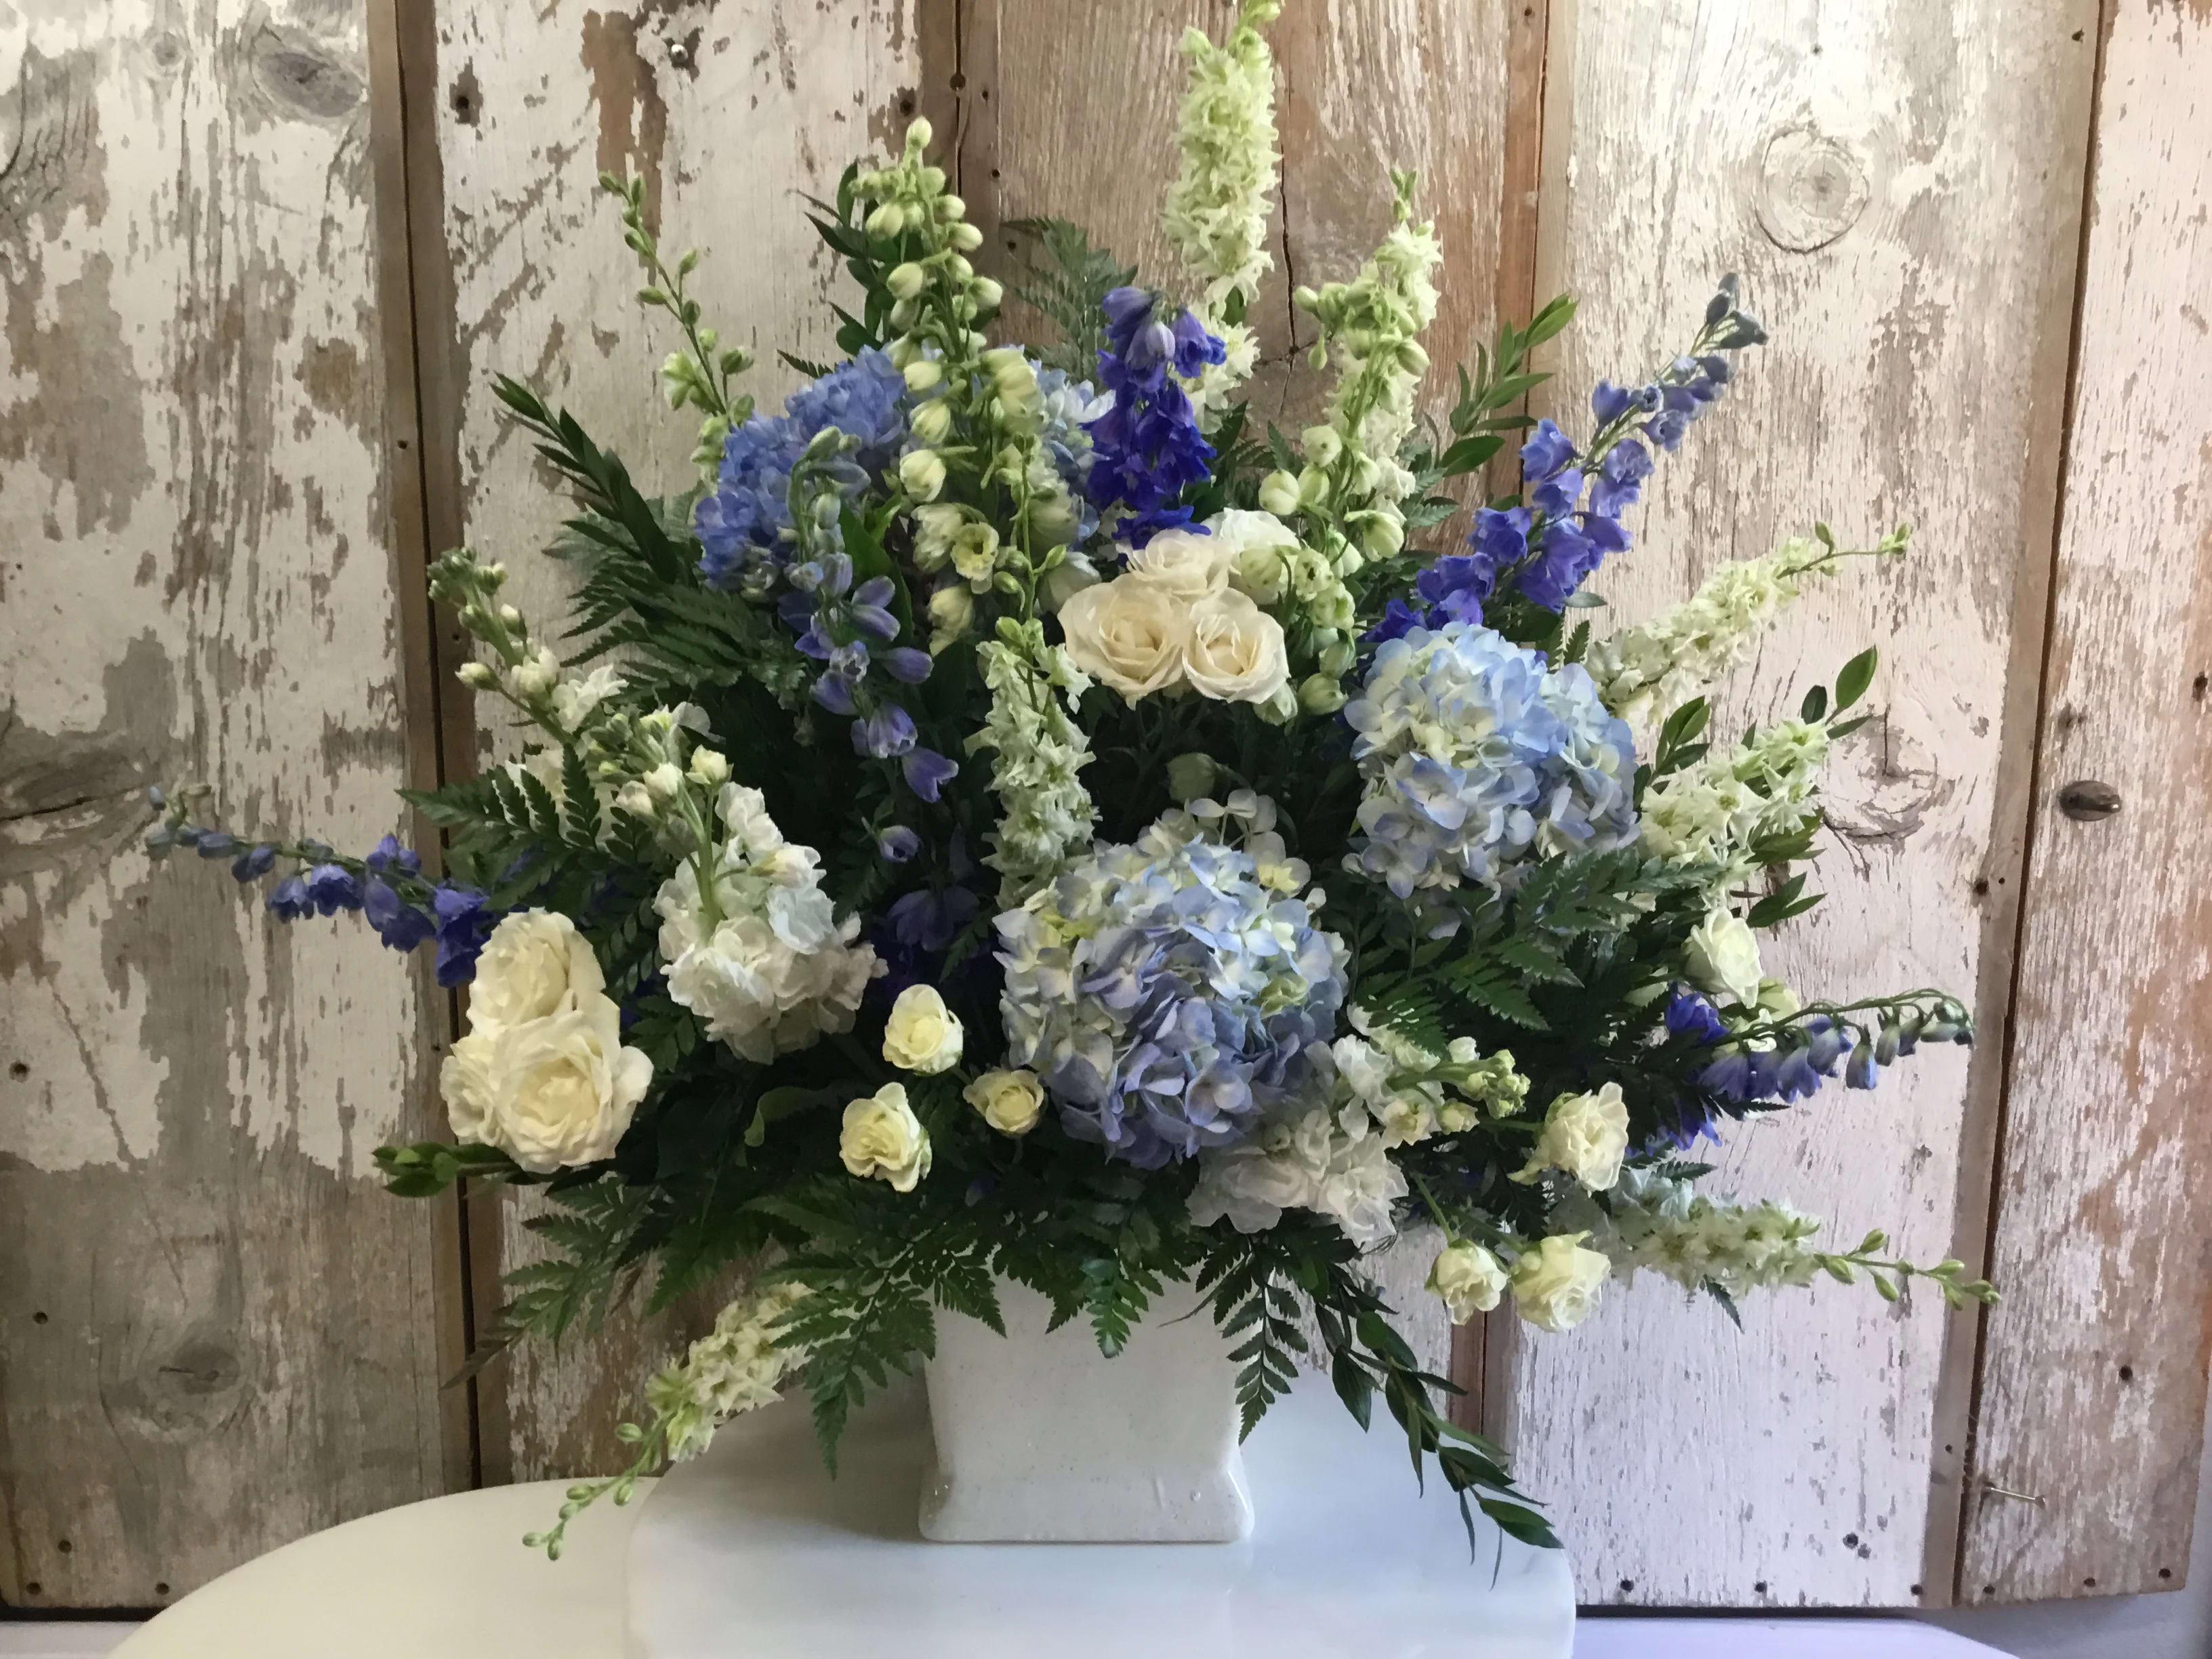 Blue and White Sympathy - Blue Hydrangeas, White Roses, Delphinium and Larkspur in a White Ceramic Planter